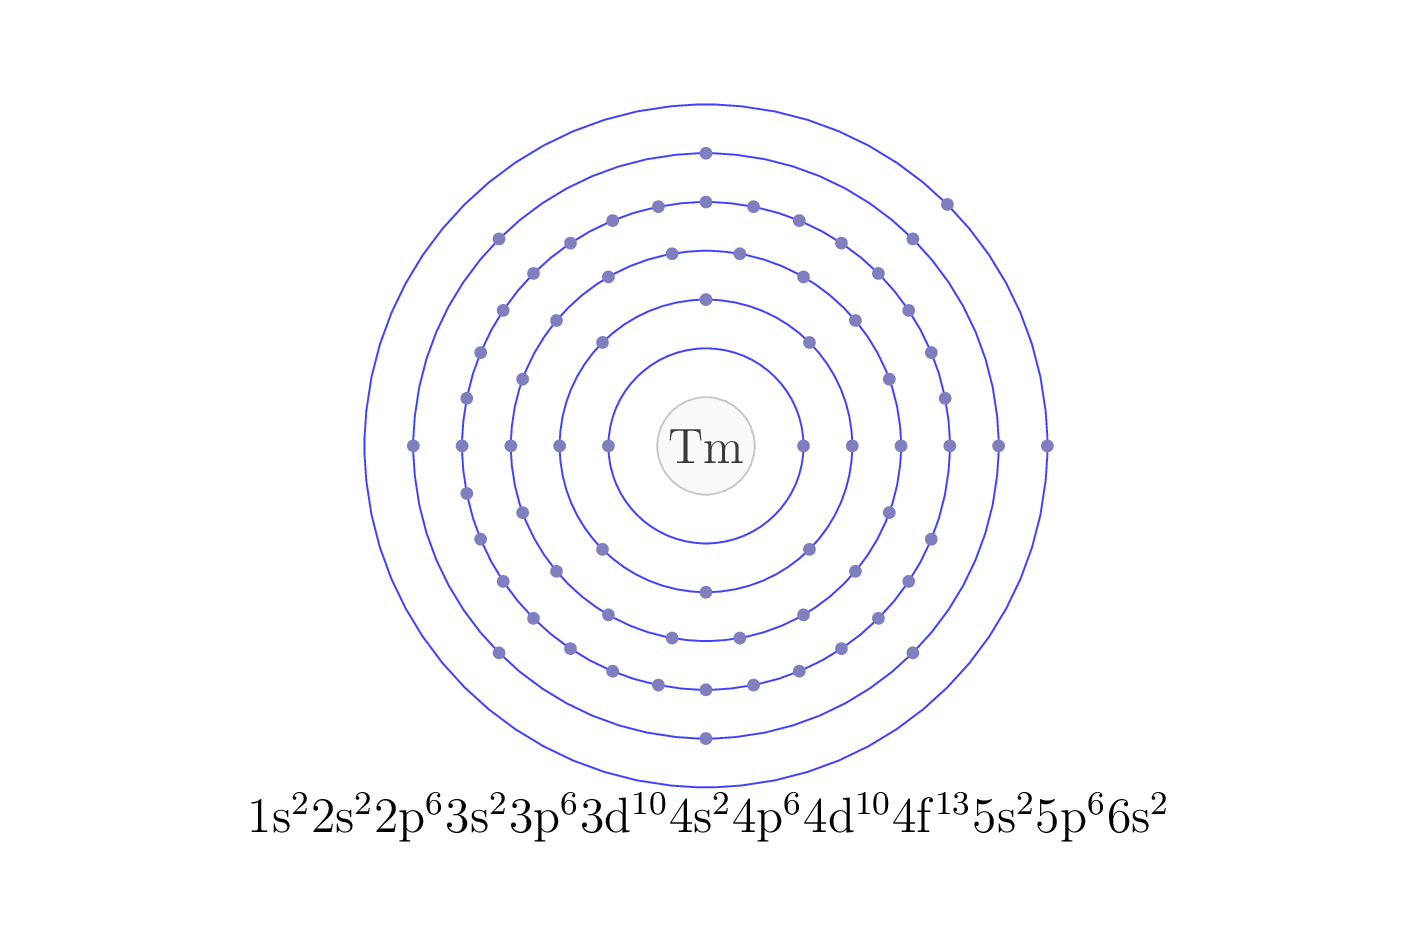 electron configuration of element Tm